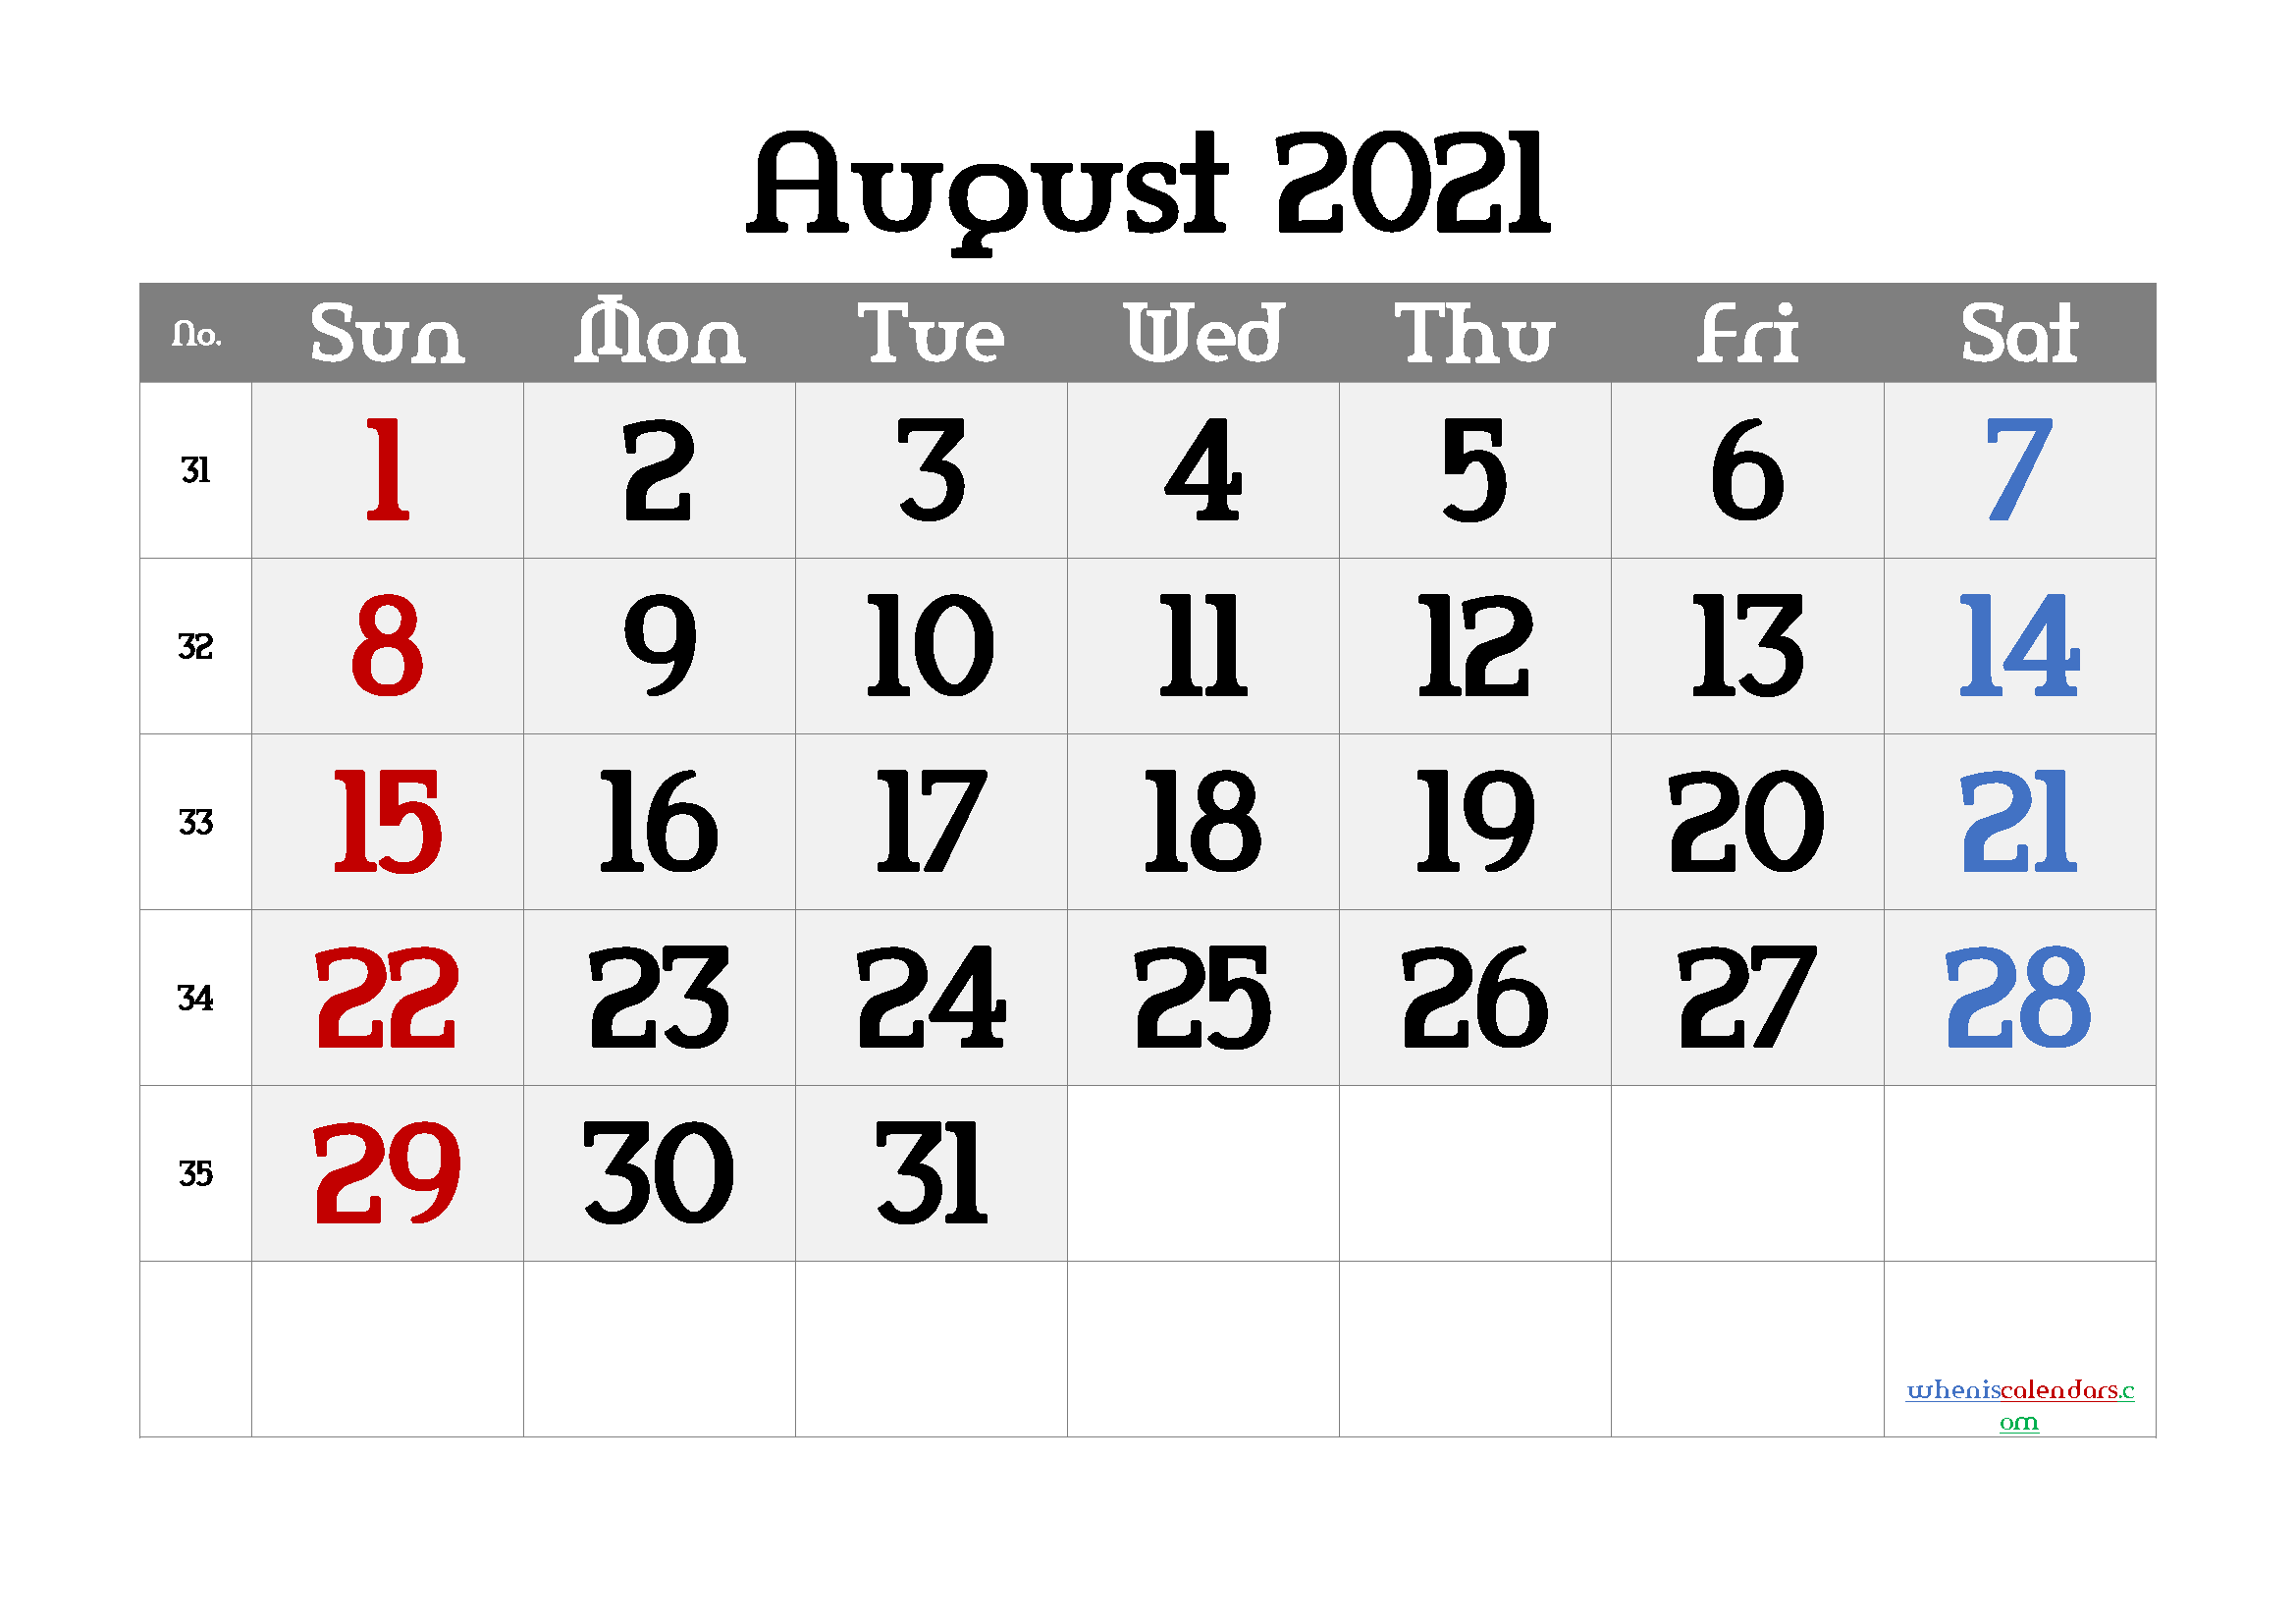 Free Printable Calendar August 2021